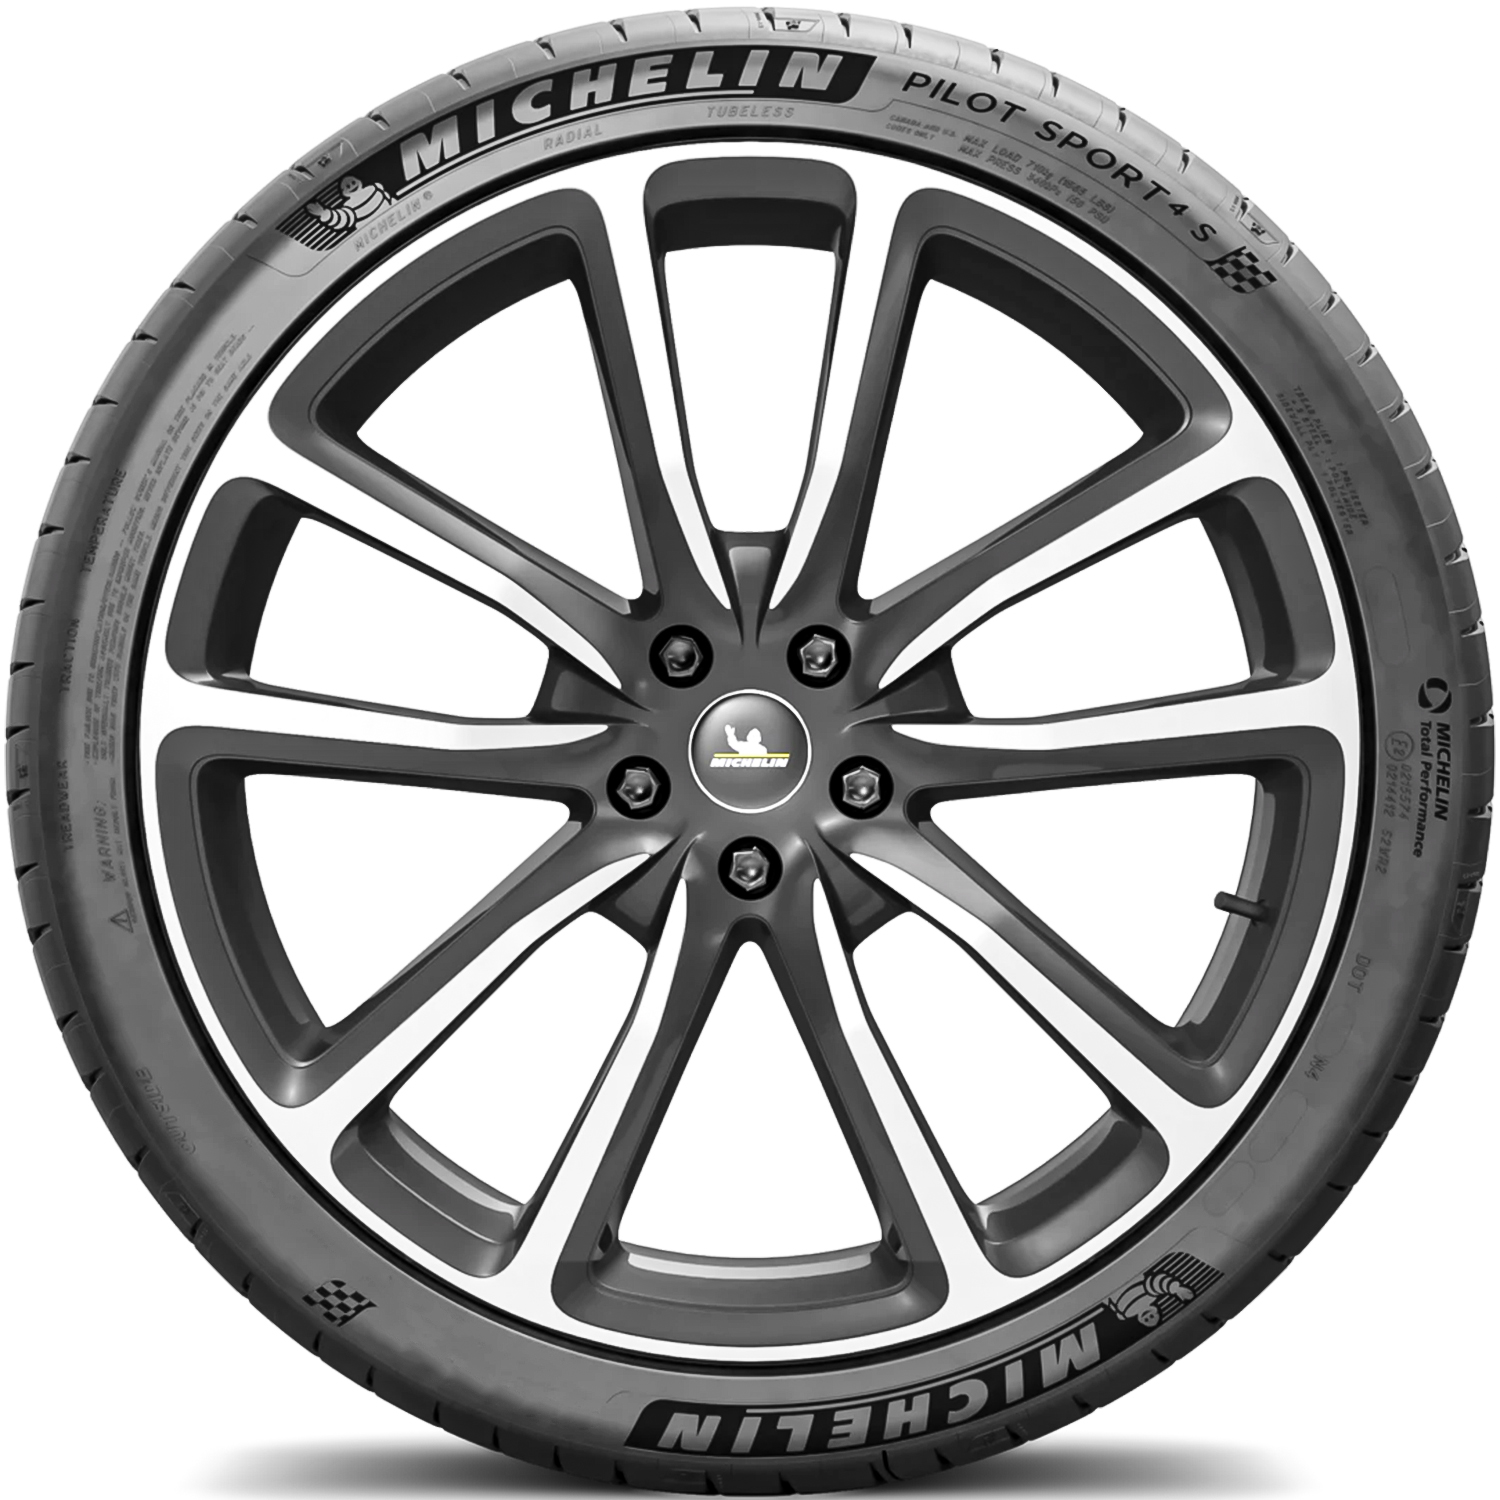 Michelin Pilot Sport 4S Performance 255/40ZR20 (101Y) XL Passenger Tire - image 5 of 14